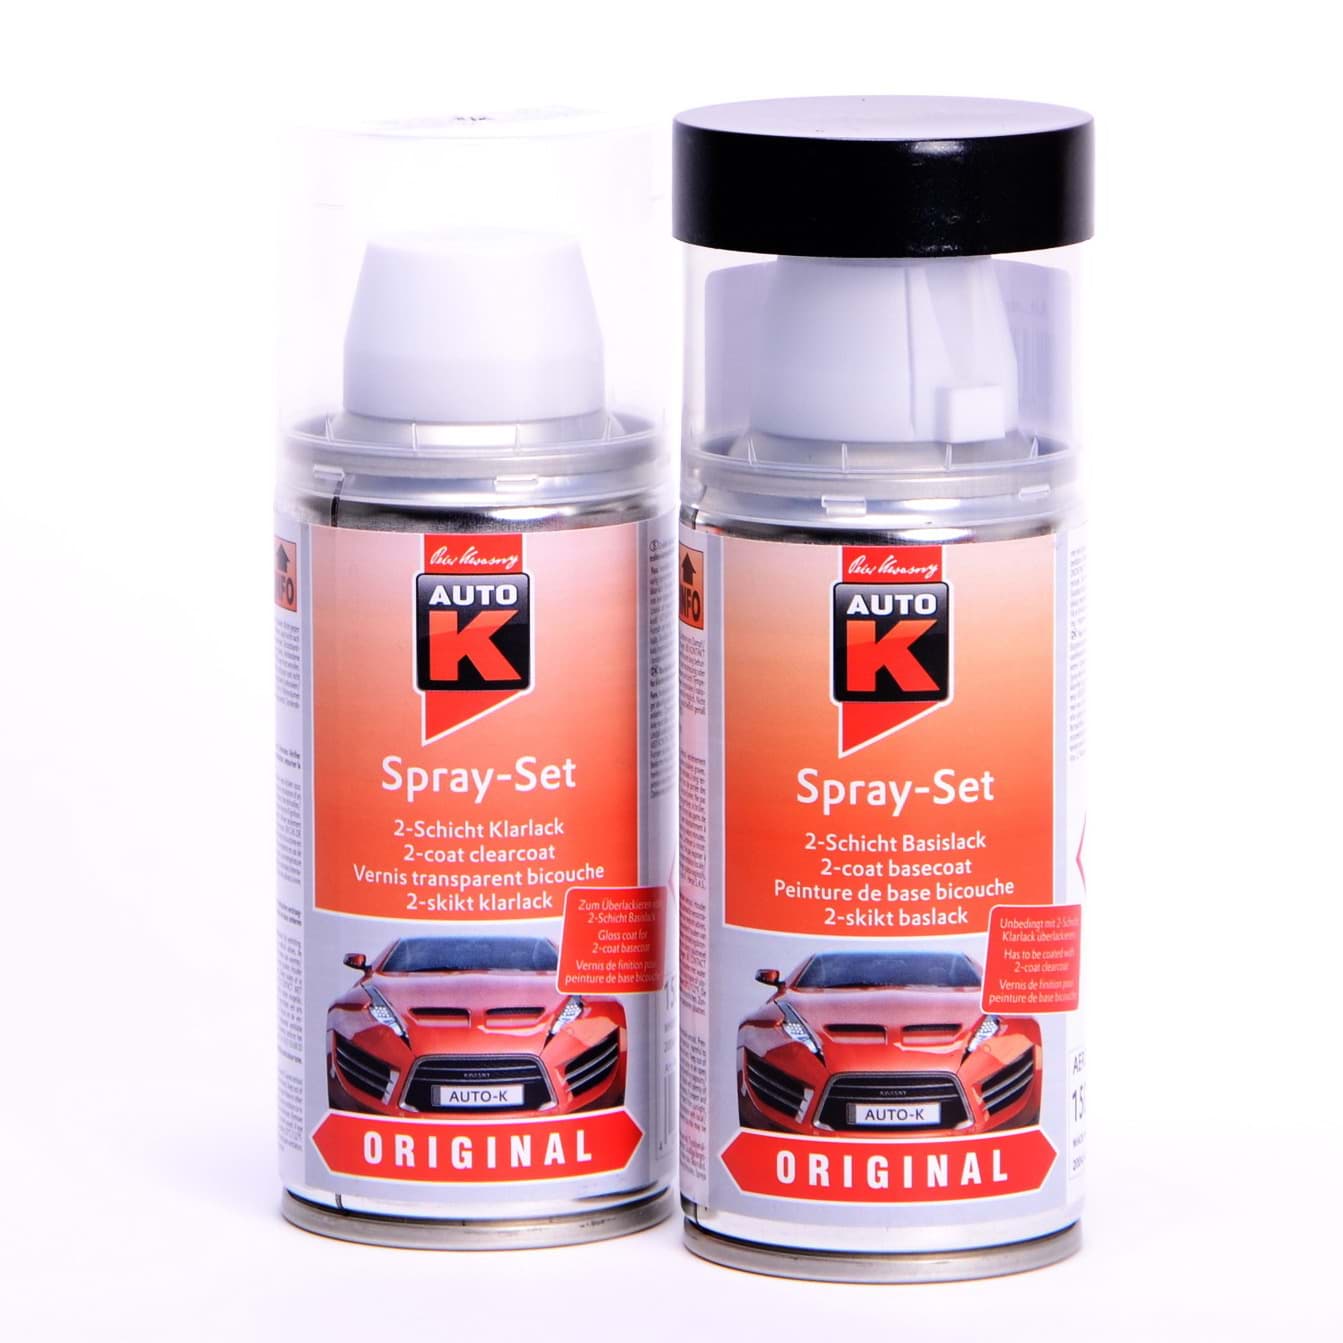 Afbeelding van Auto-K Spray-Set Autolack für BMW 303 Cosmosschwarz met 27266